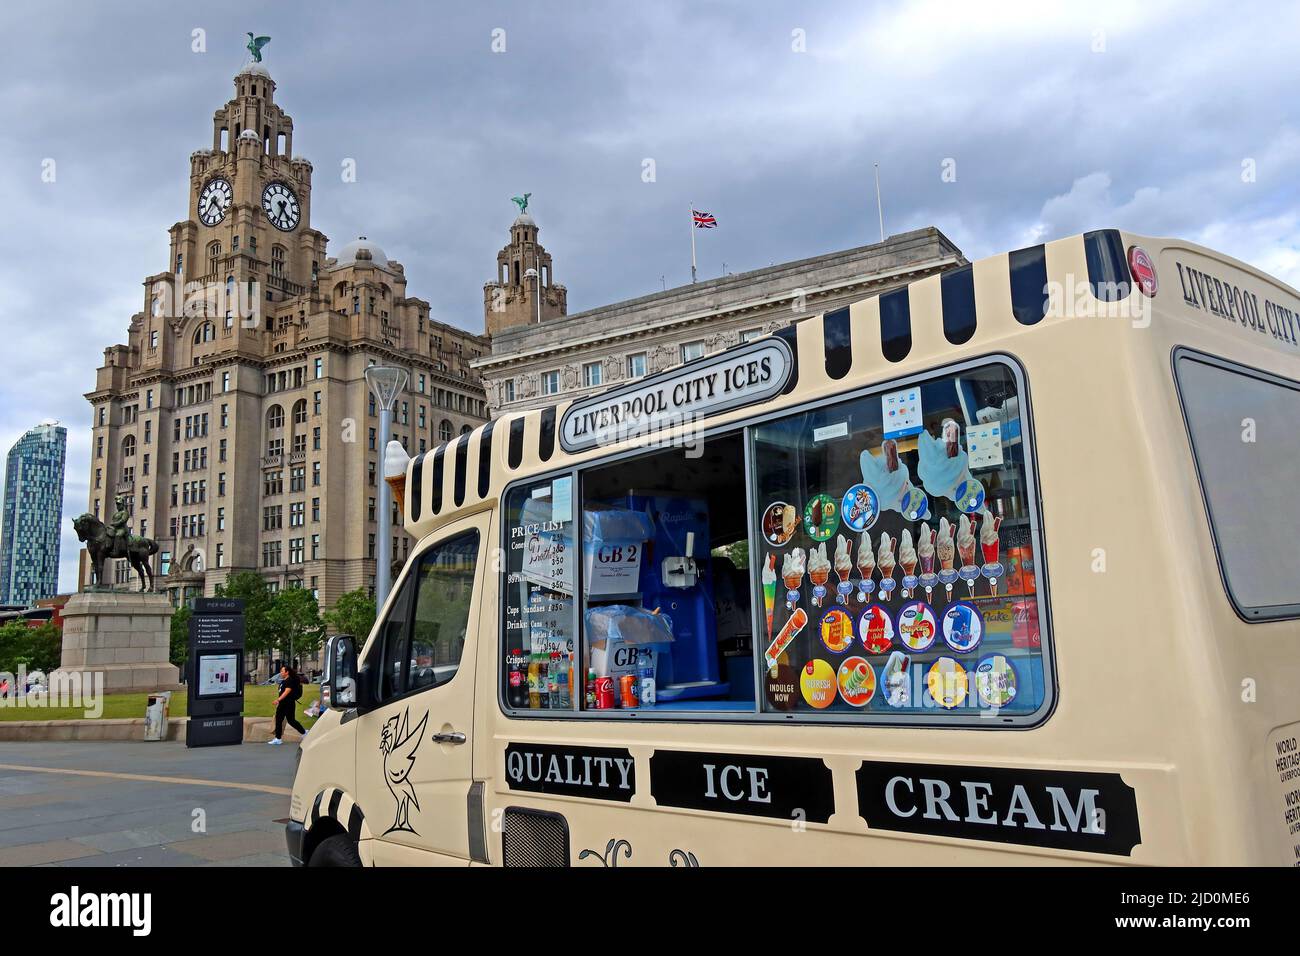 An ice cream van, at the Pierhead, Liverpool City Ices , Merseyside, England, UK, L3 1HU Stock Photo